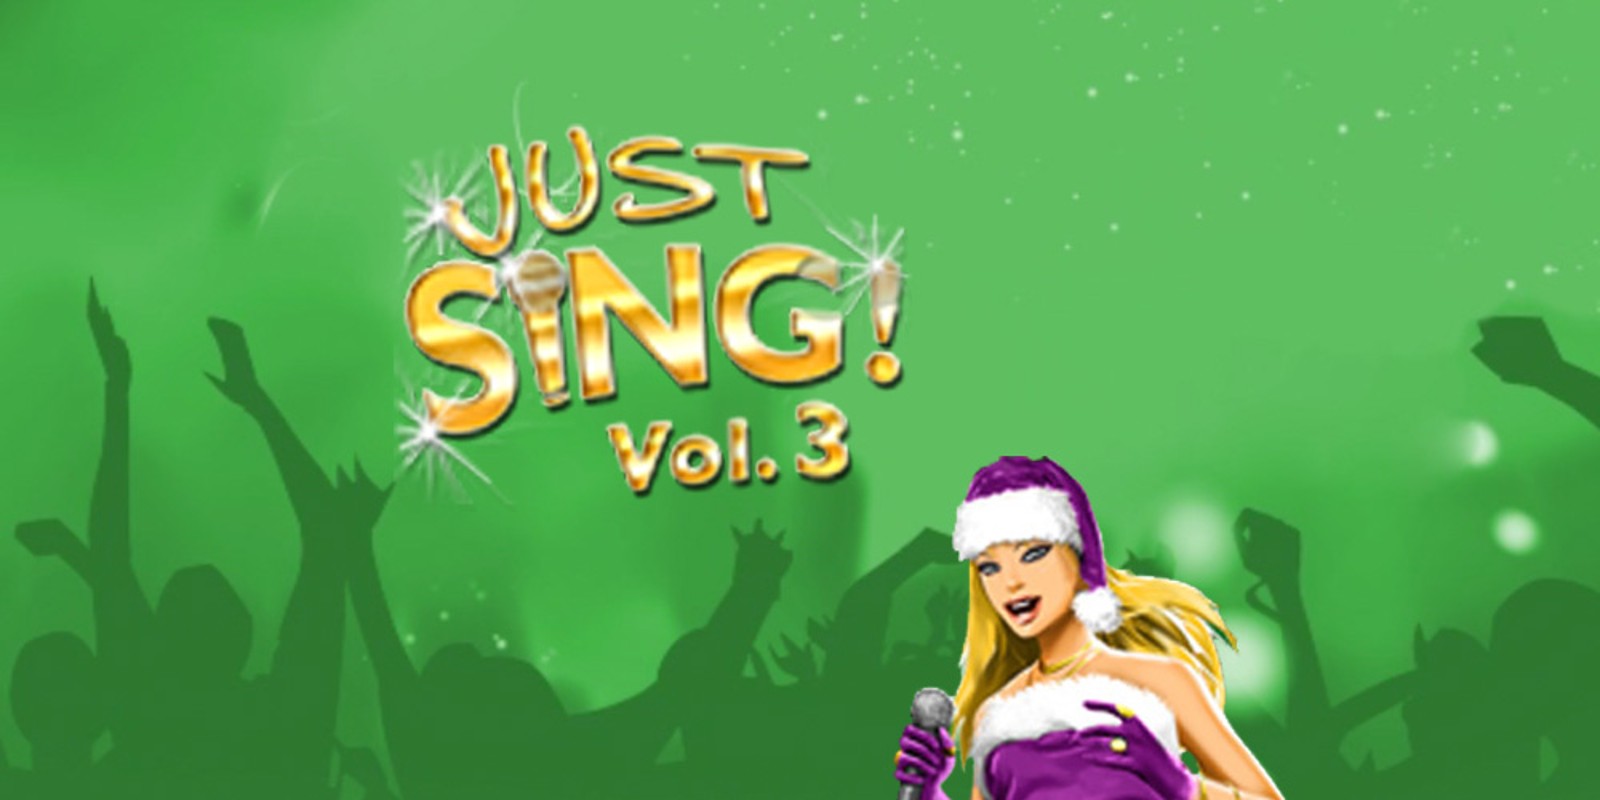 Just SING! Christmas Vol. 3